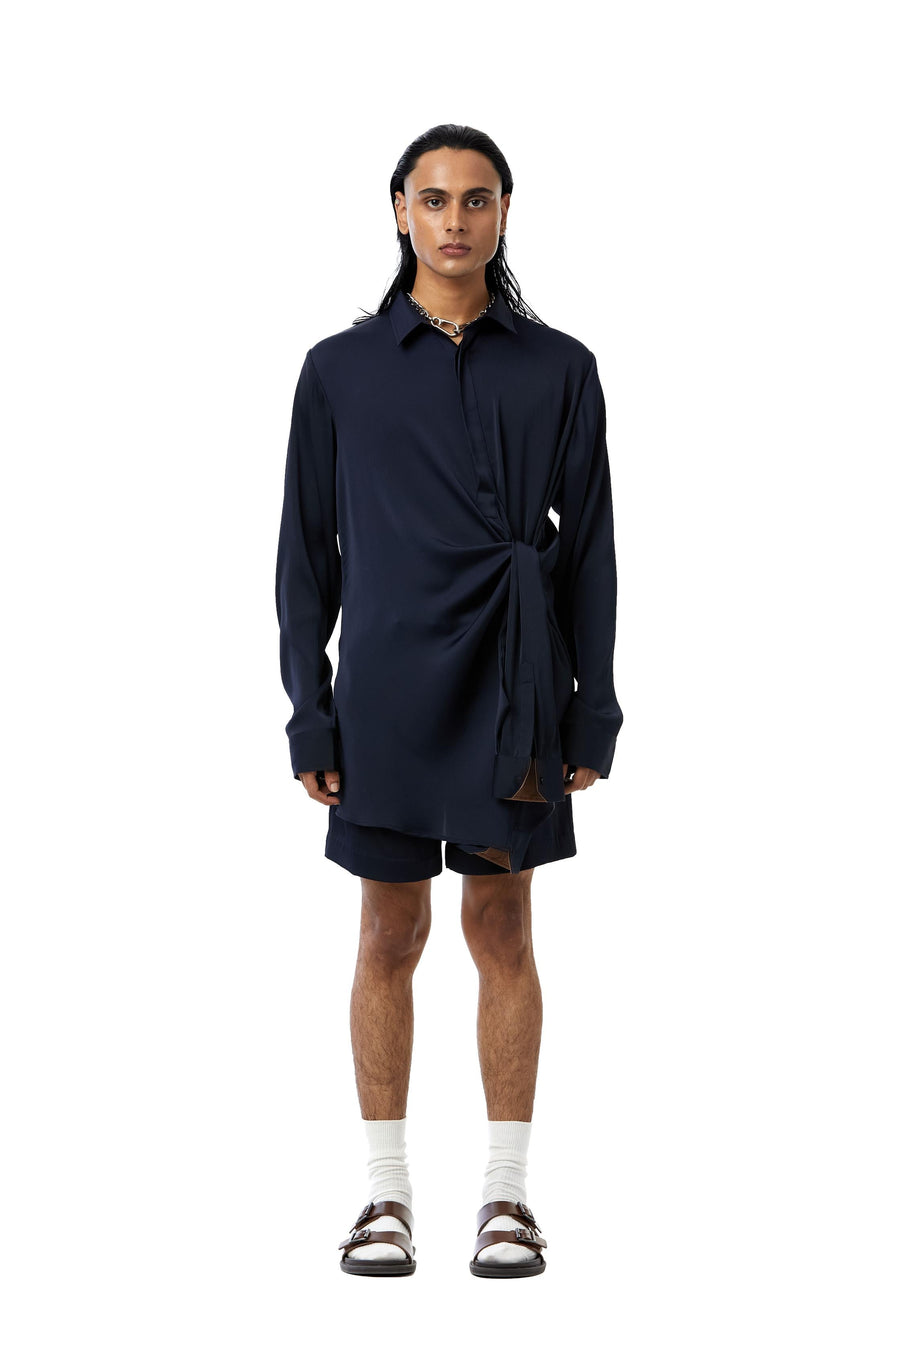 Full sleeves satin tie up shirt matching shorts - Kanika Goyal Label